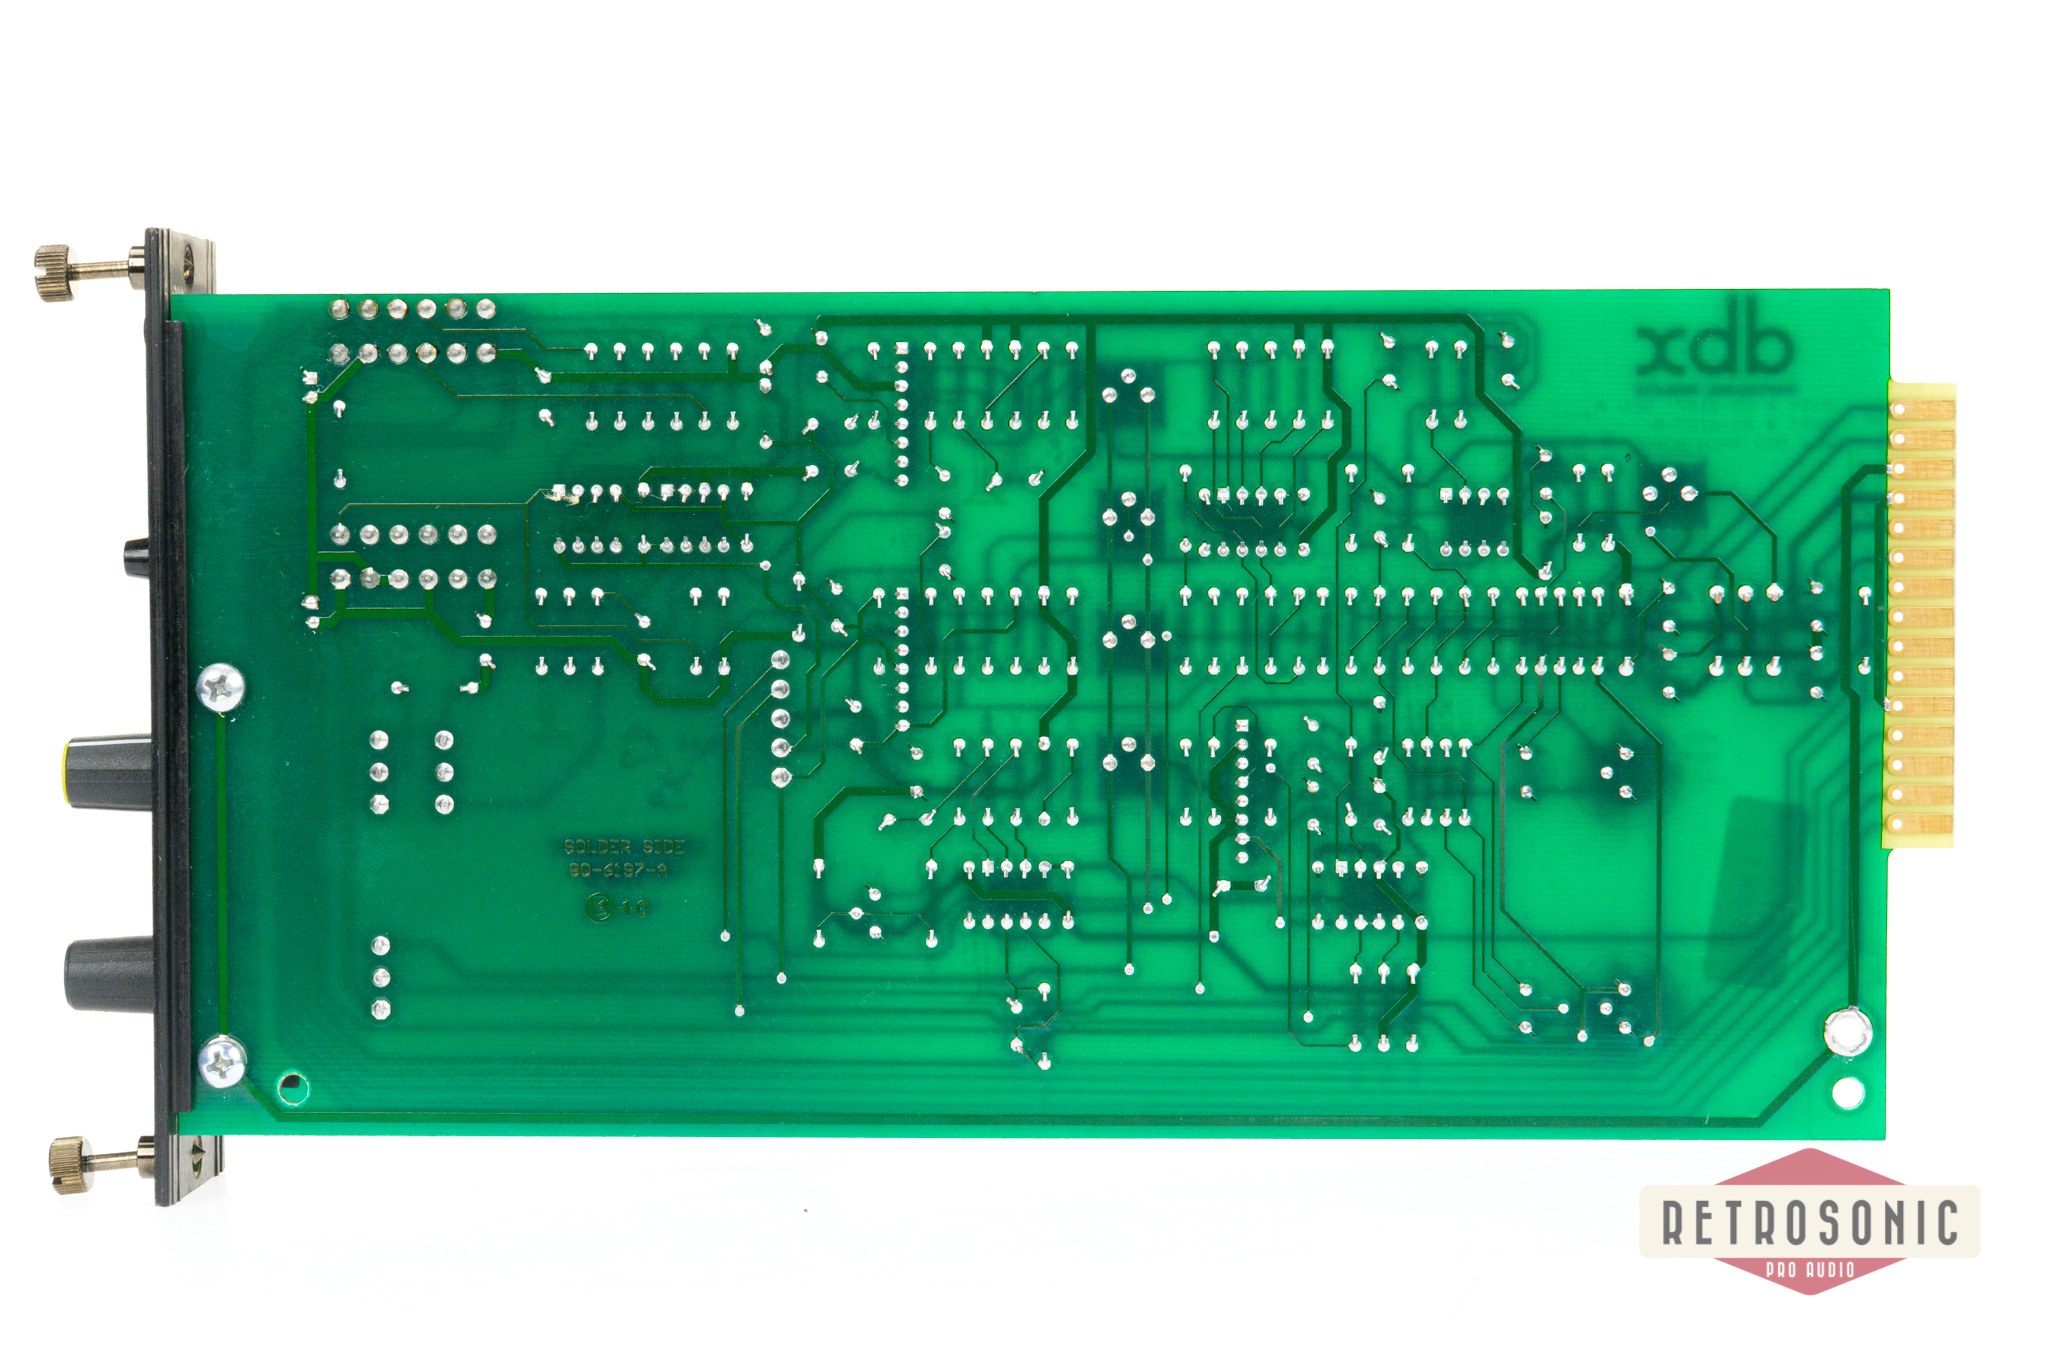 DBX 902 DE-Esser 900-series module # 4